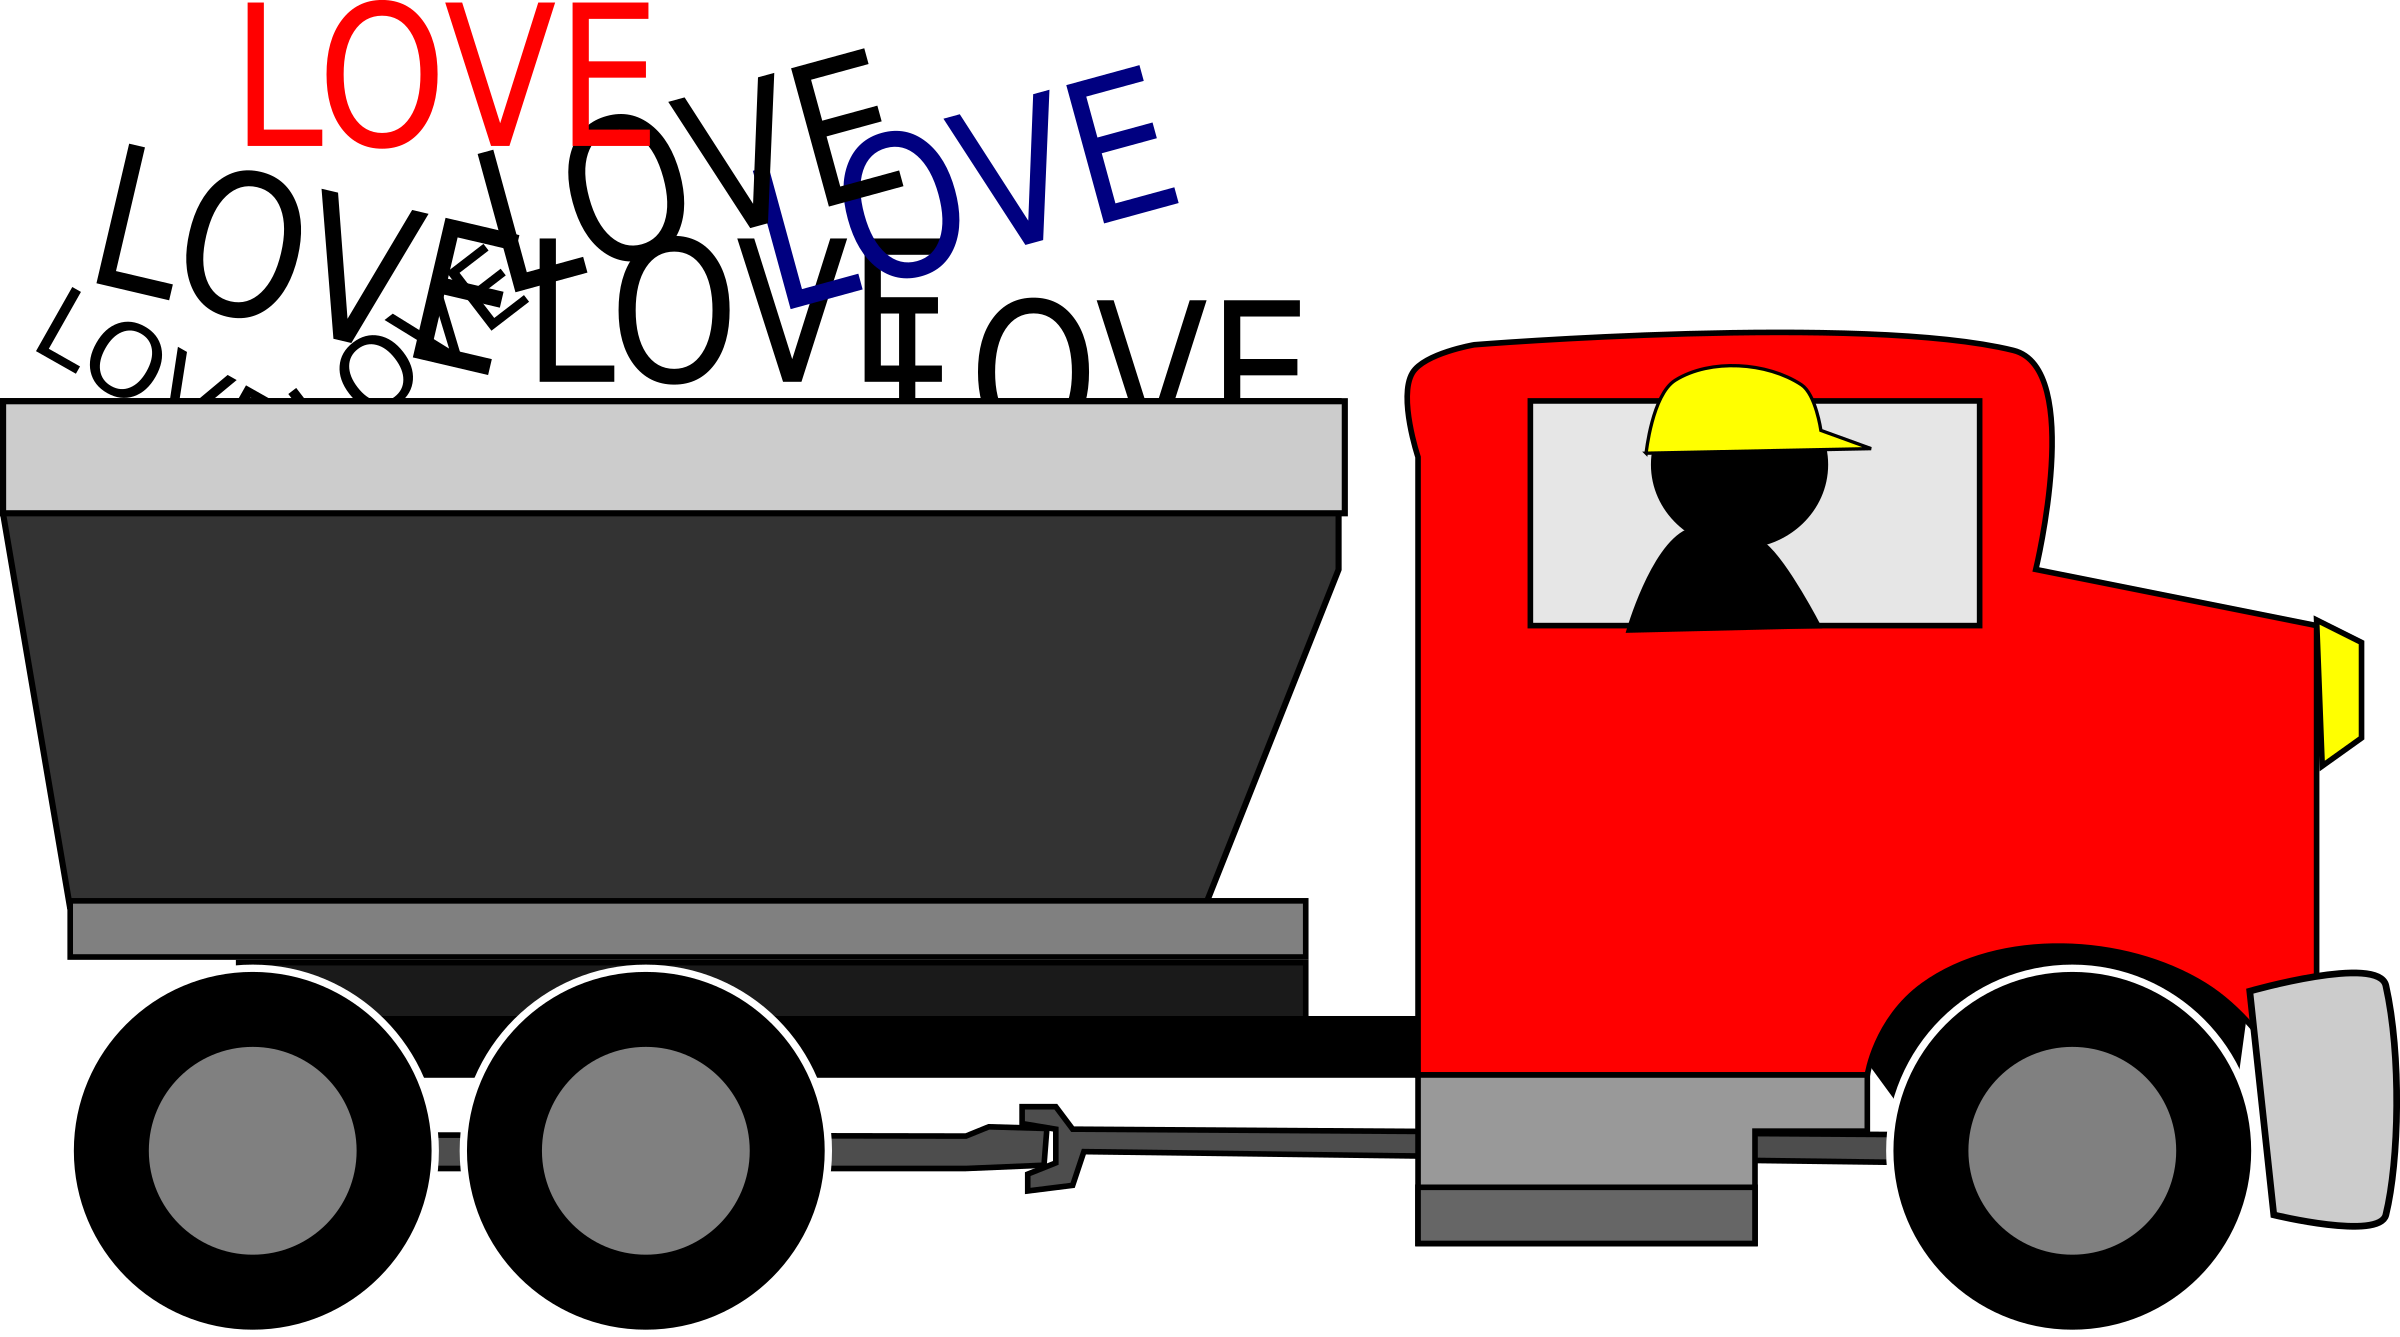 Loads Of Love - Truck Load Of Love (2400x1337)